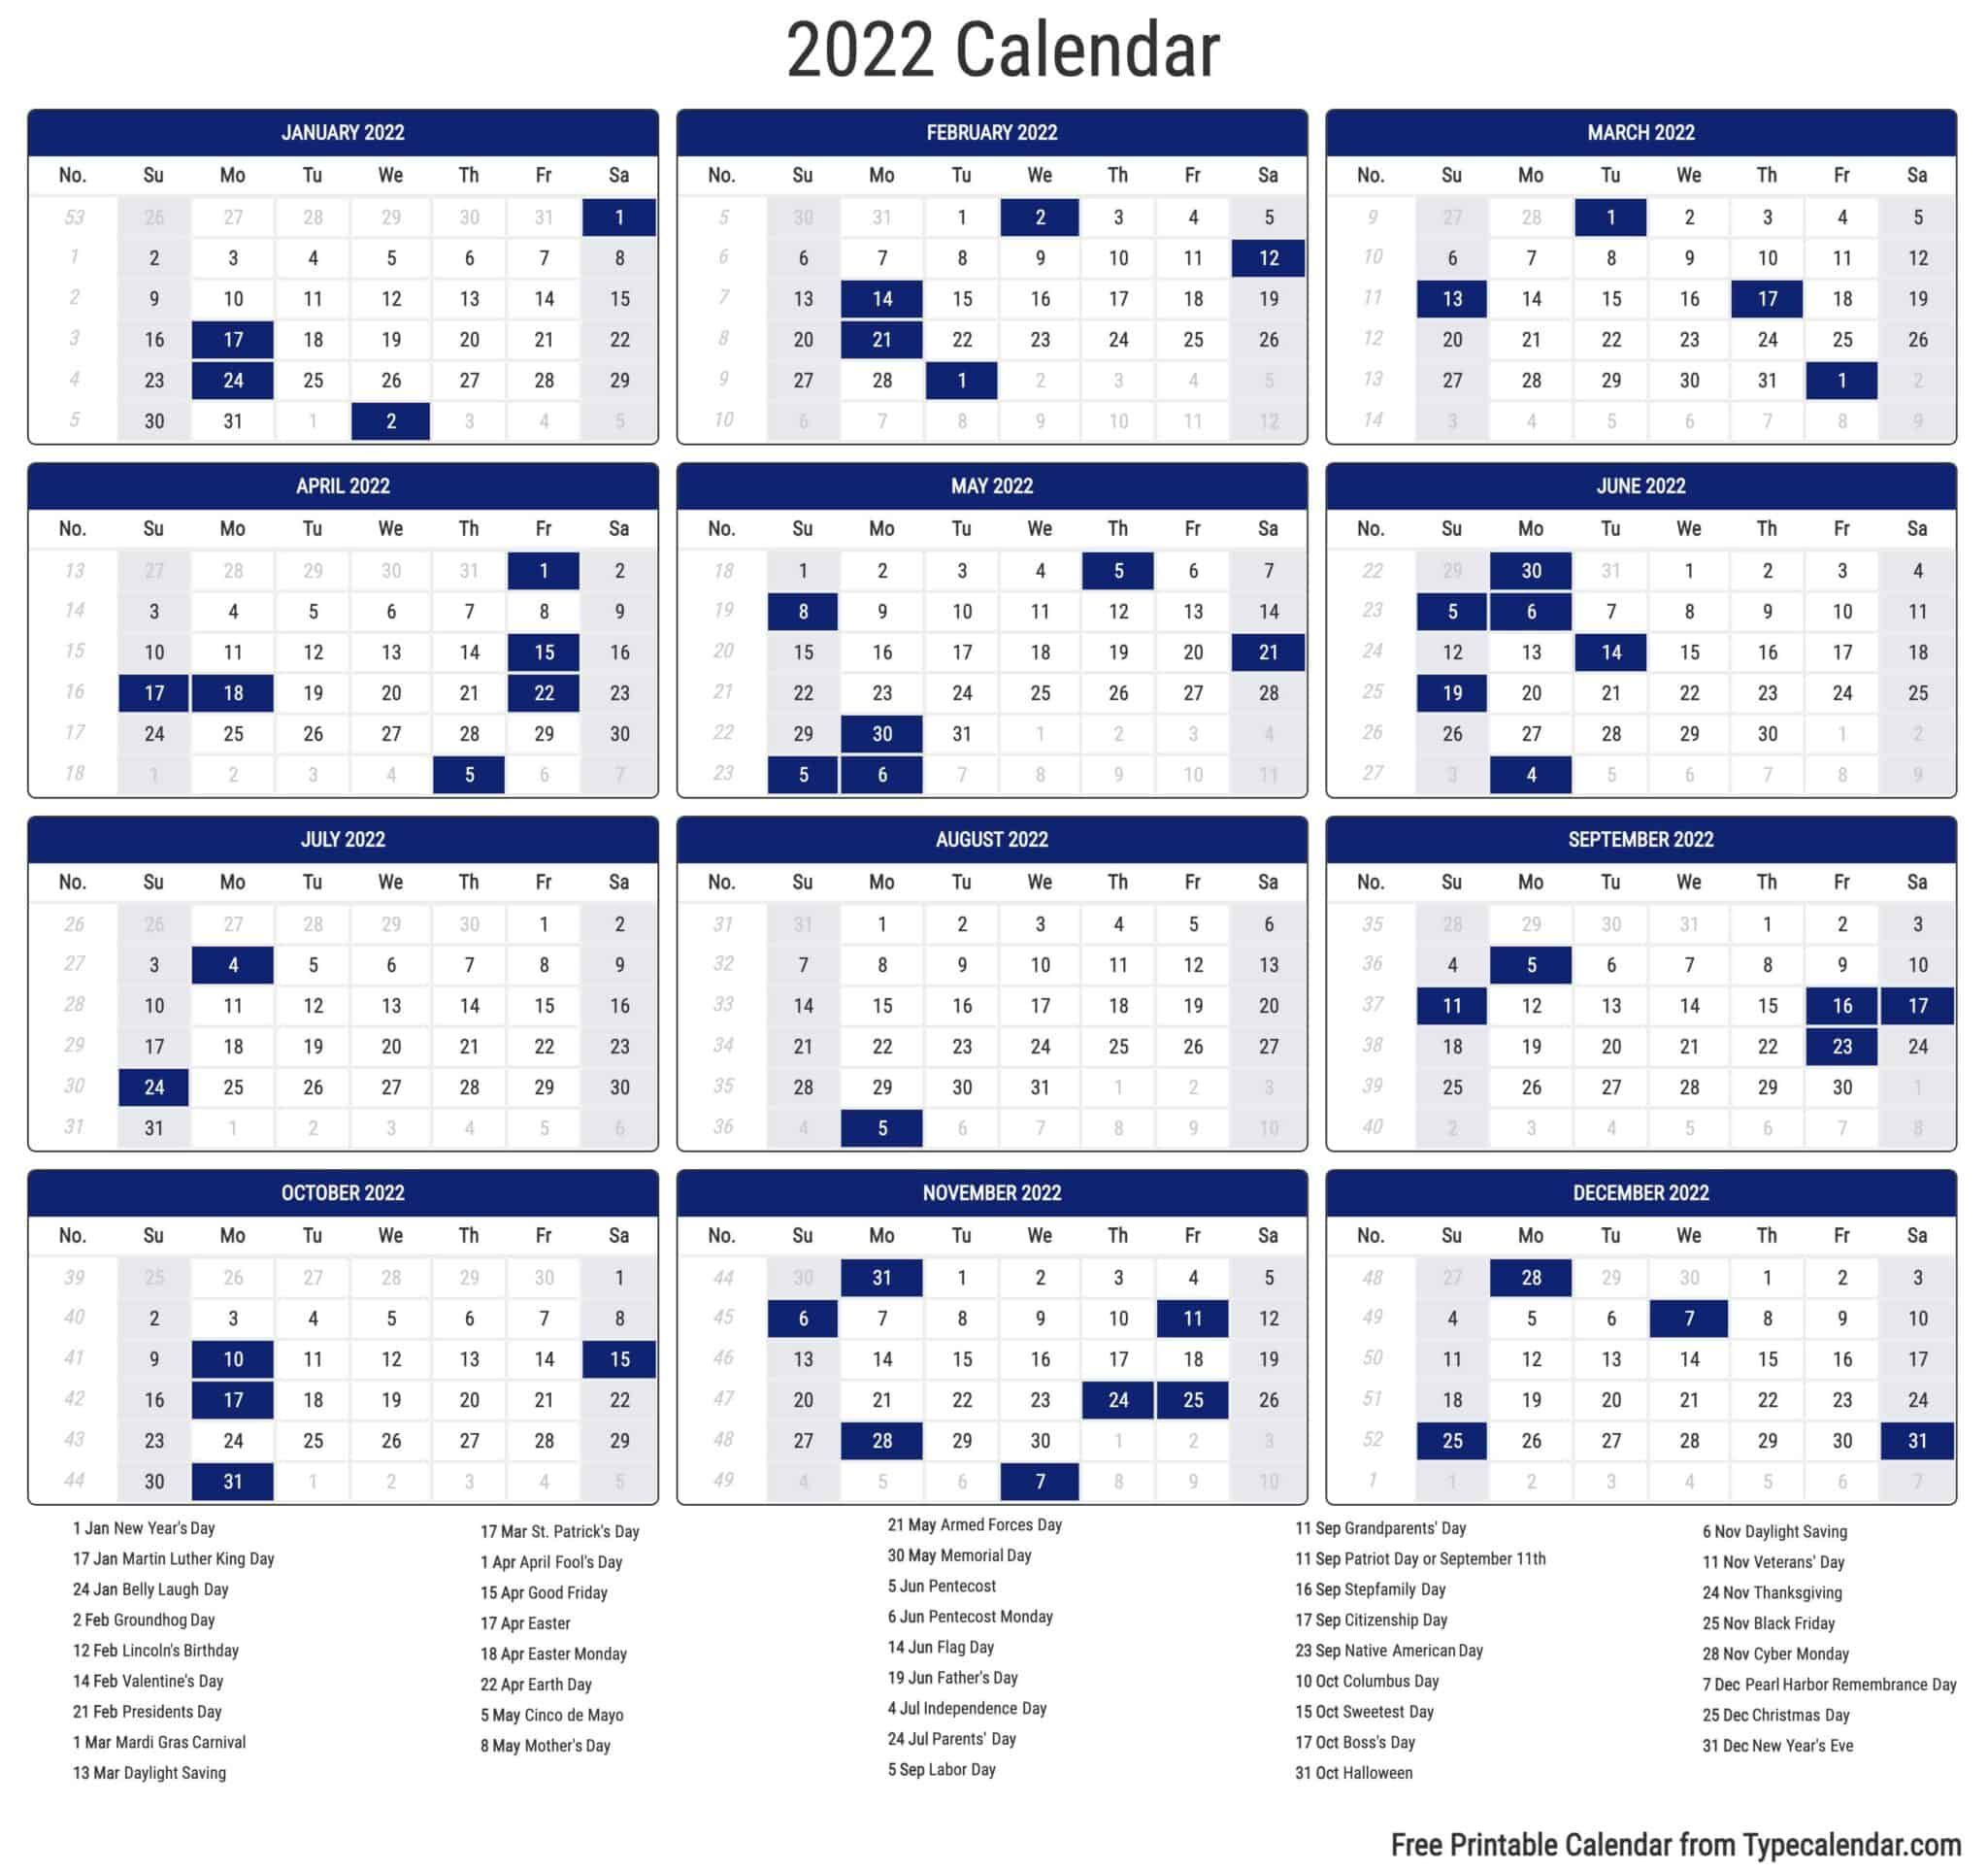 free-printable-calendar-range-of-dates-example-calendar-printable